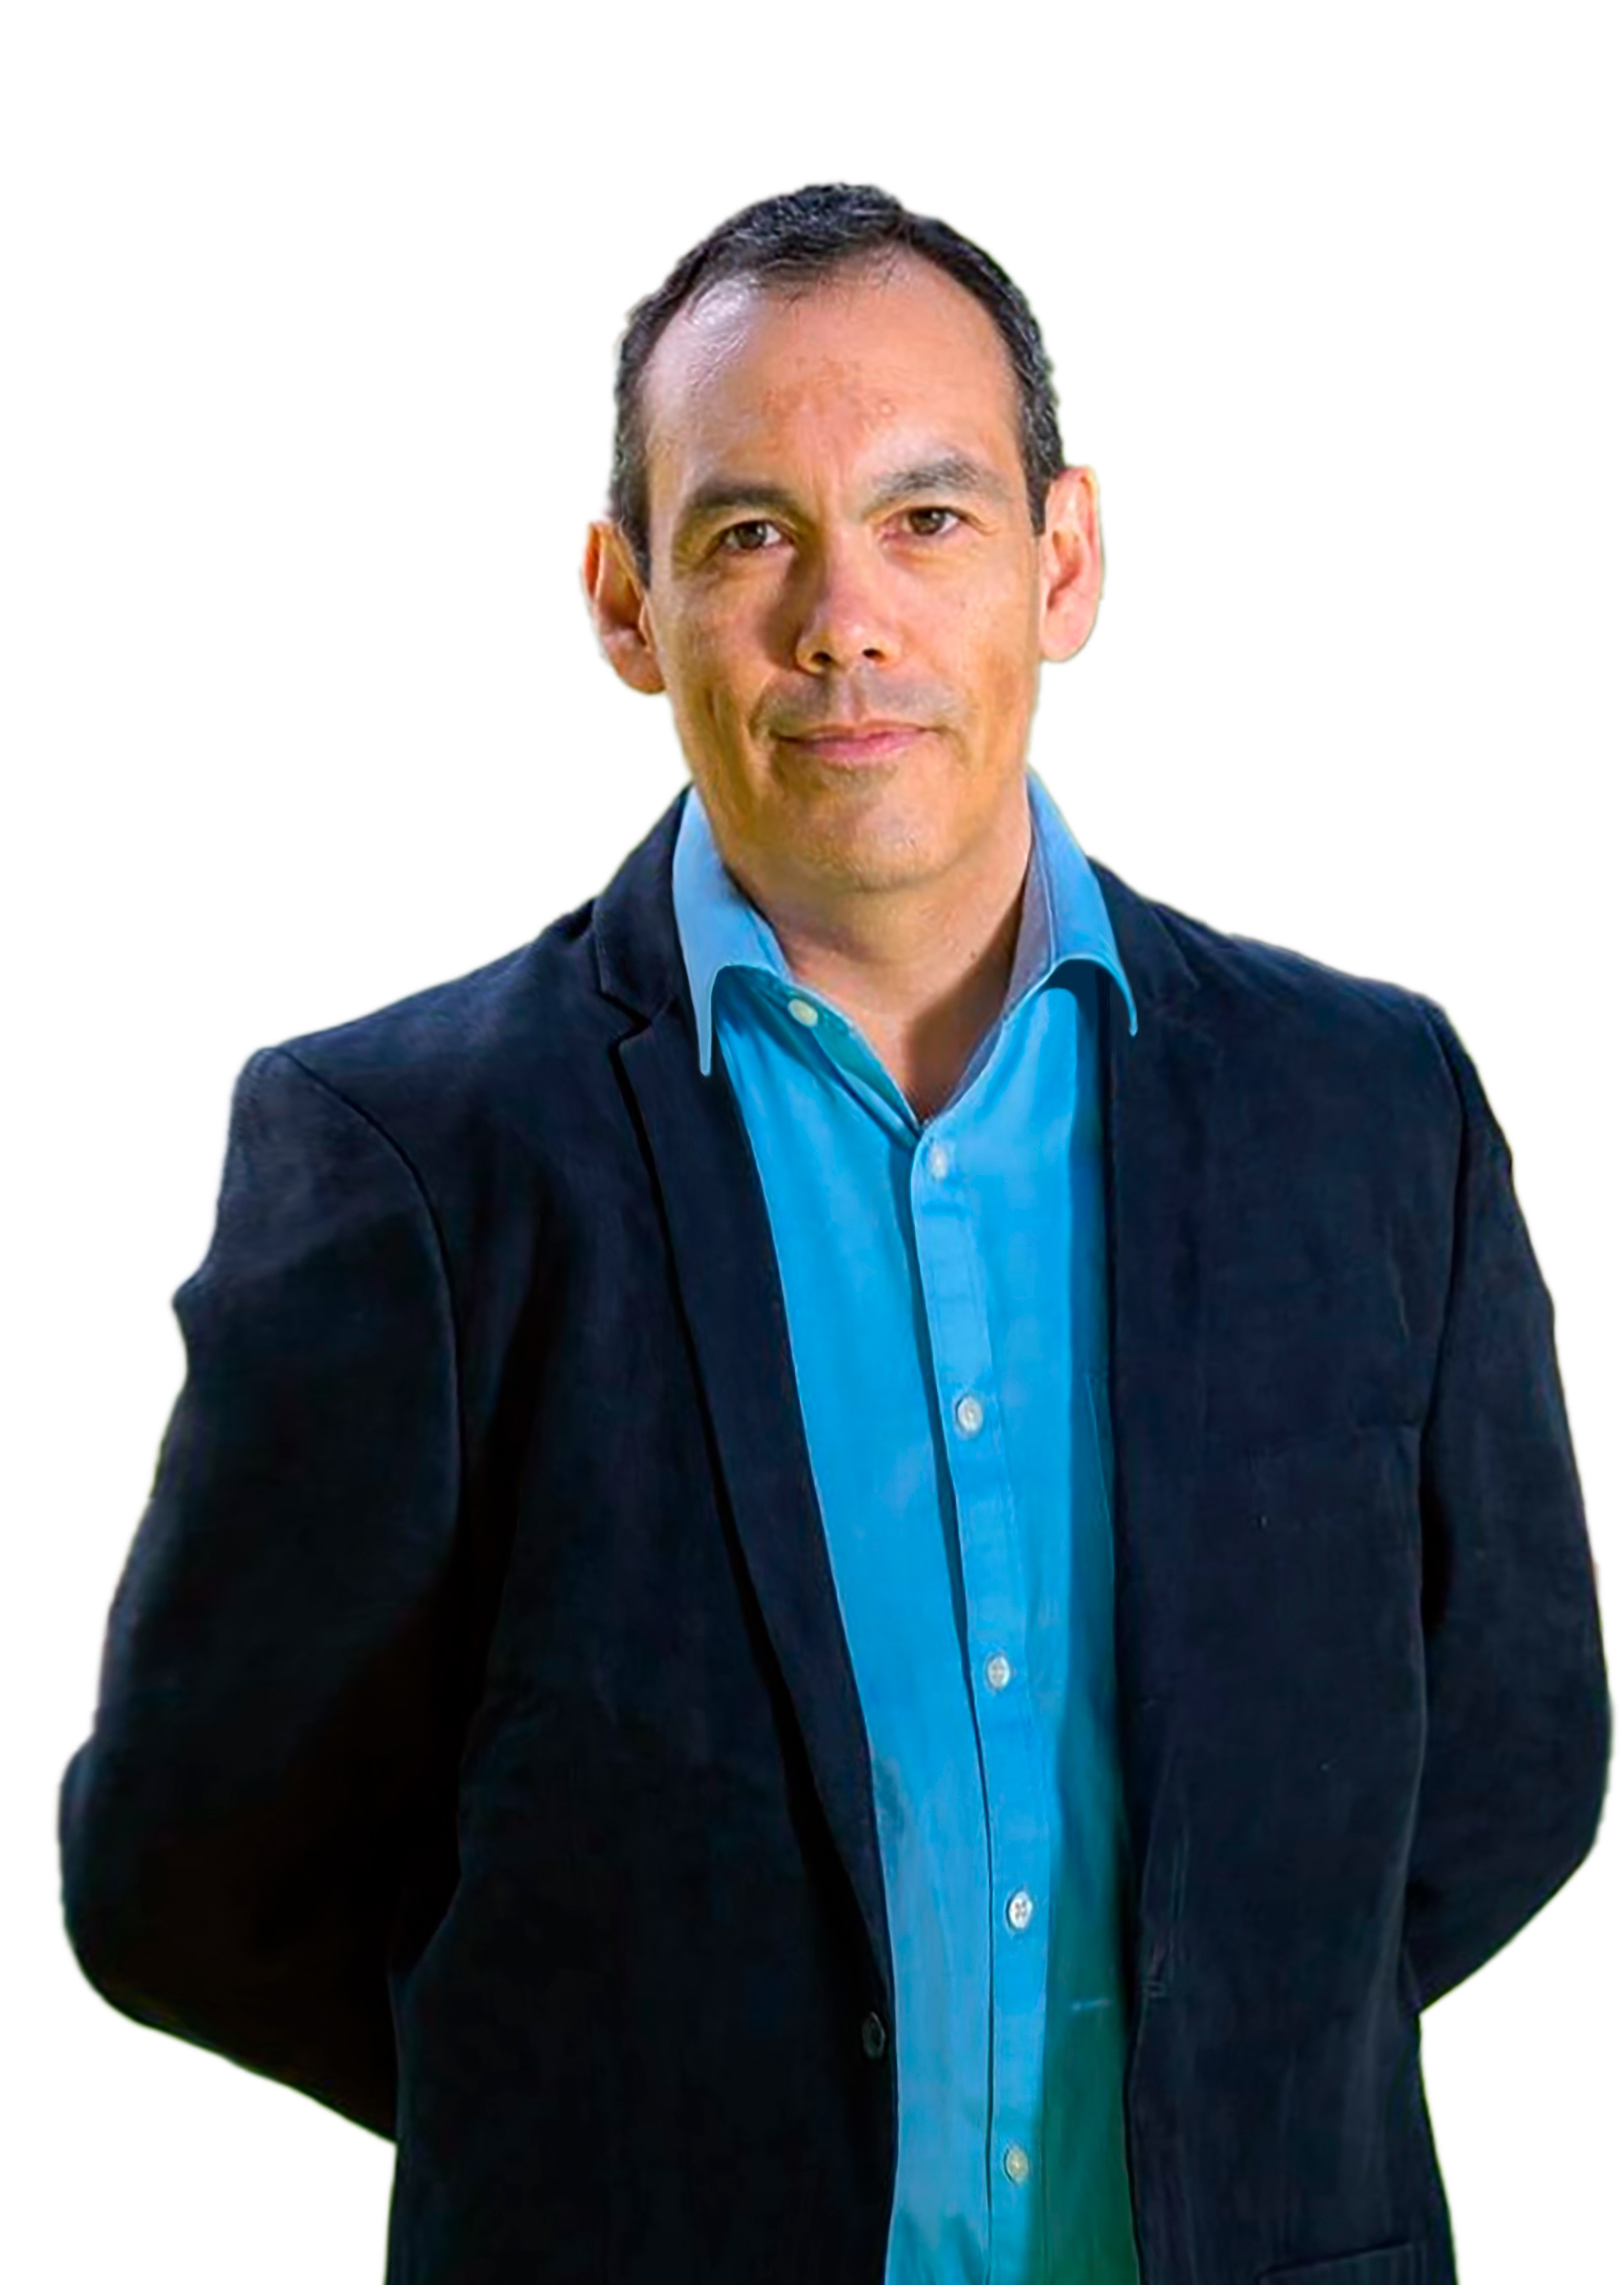 headshot of Carlos Moreno against white background